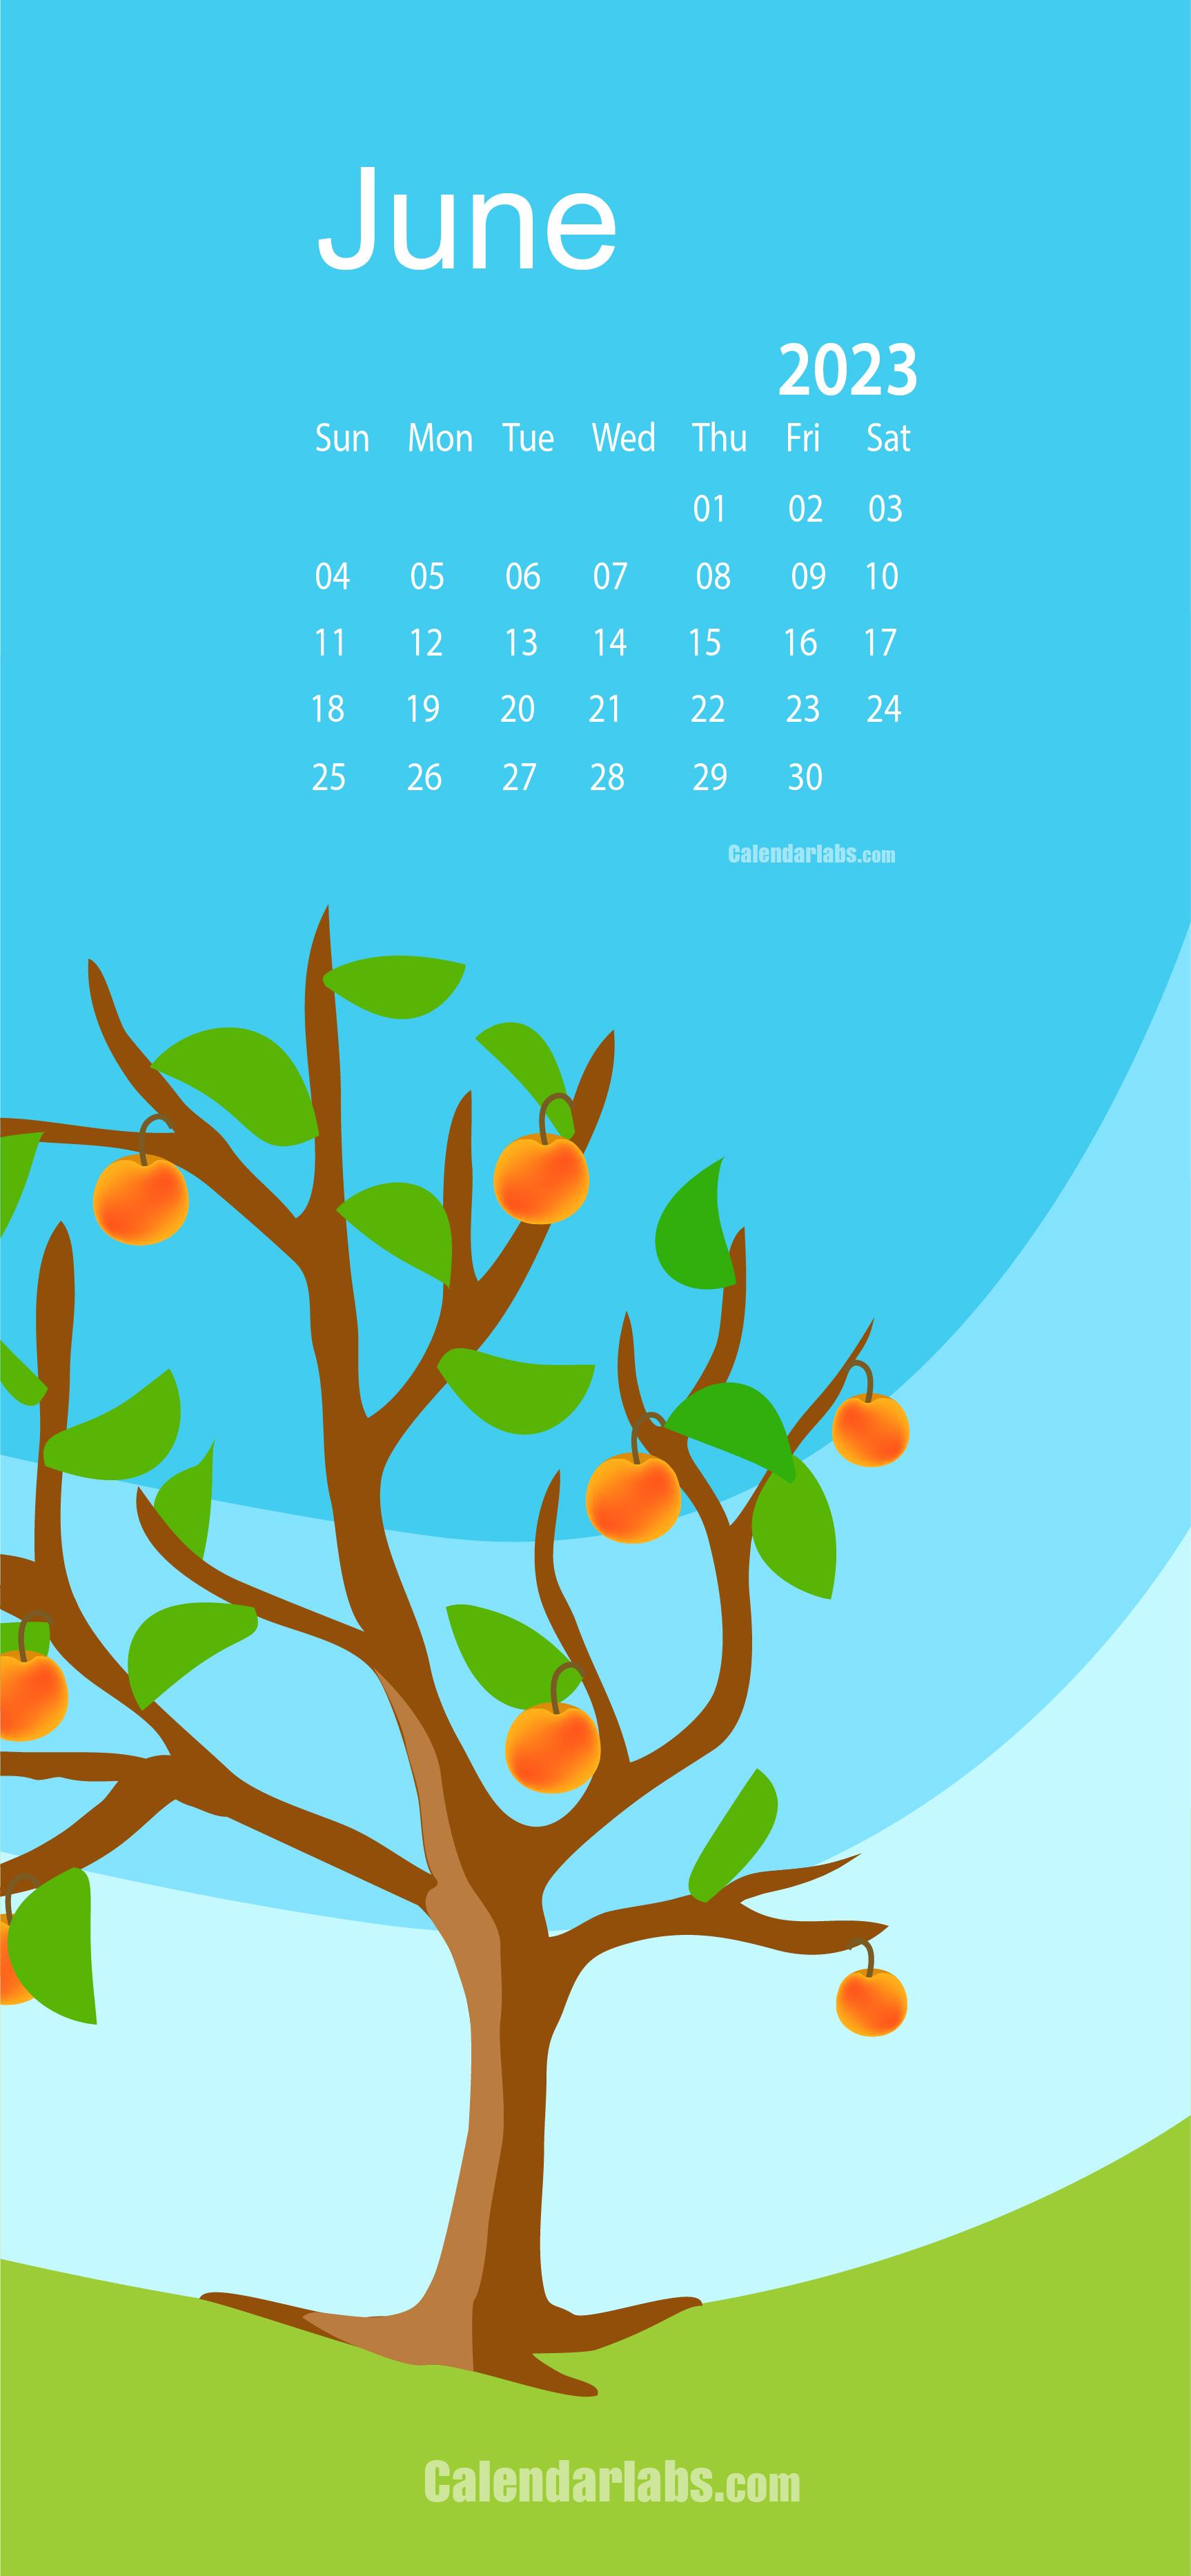 June Desktop Wallpaper Calendar Calendarlabs